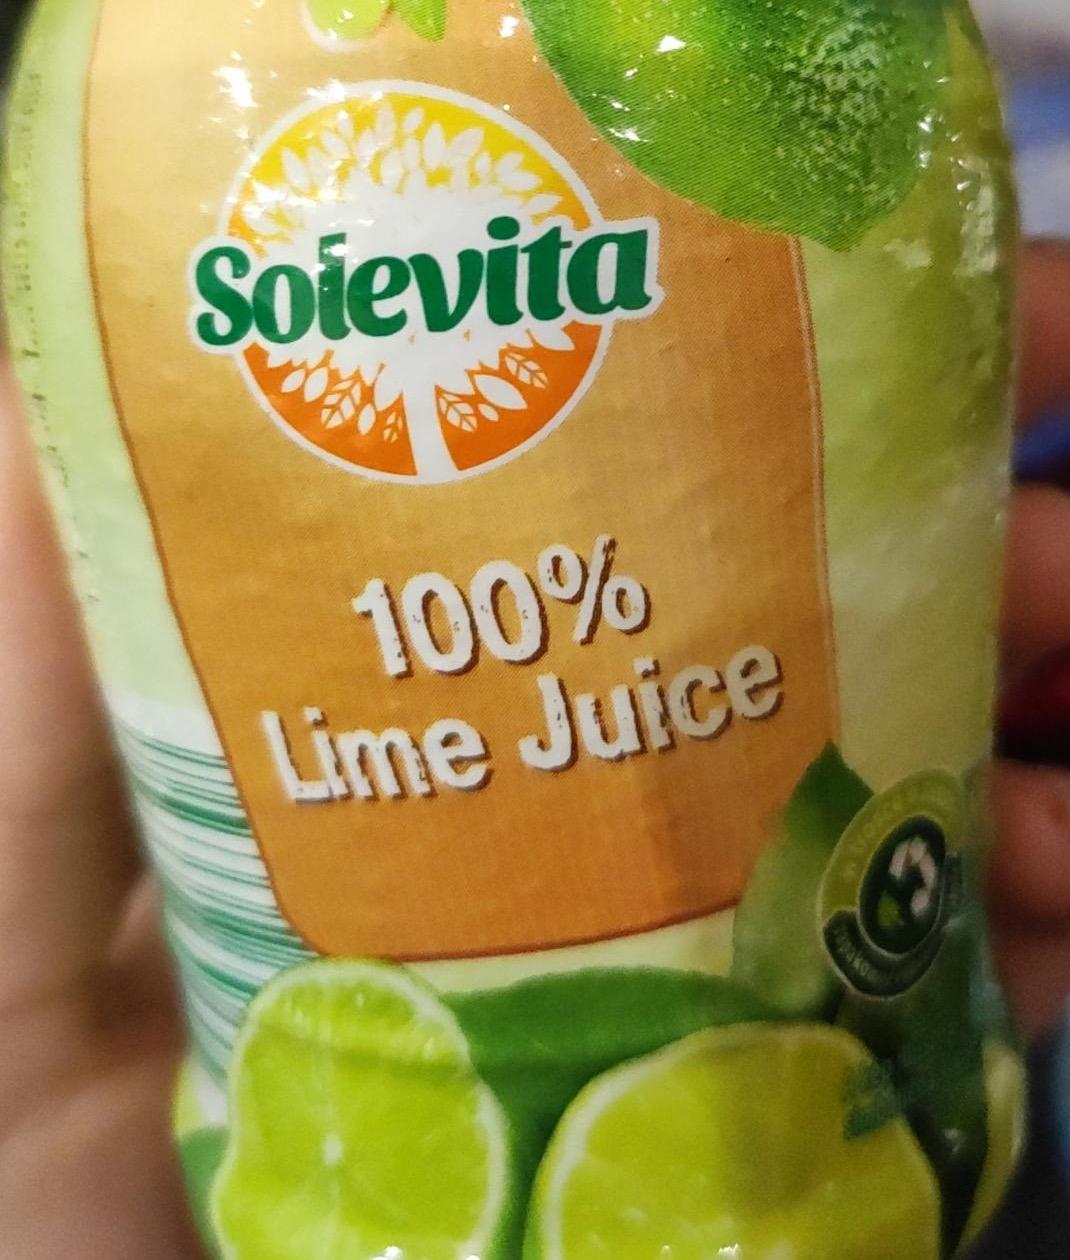 Képek - 100% Lime juice Solevita